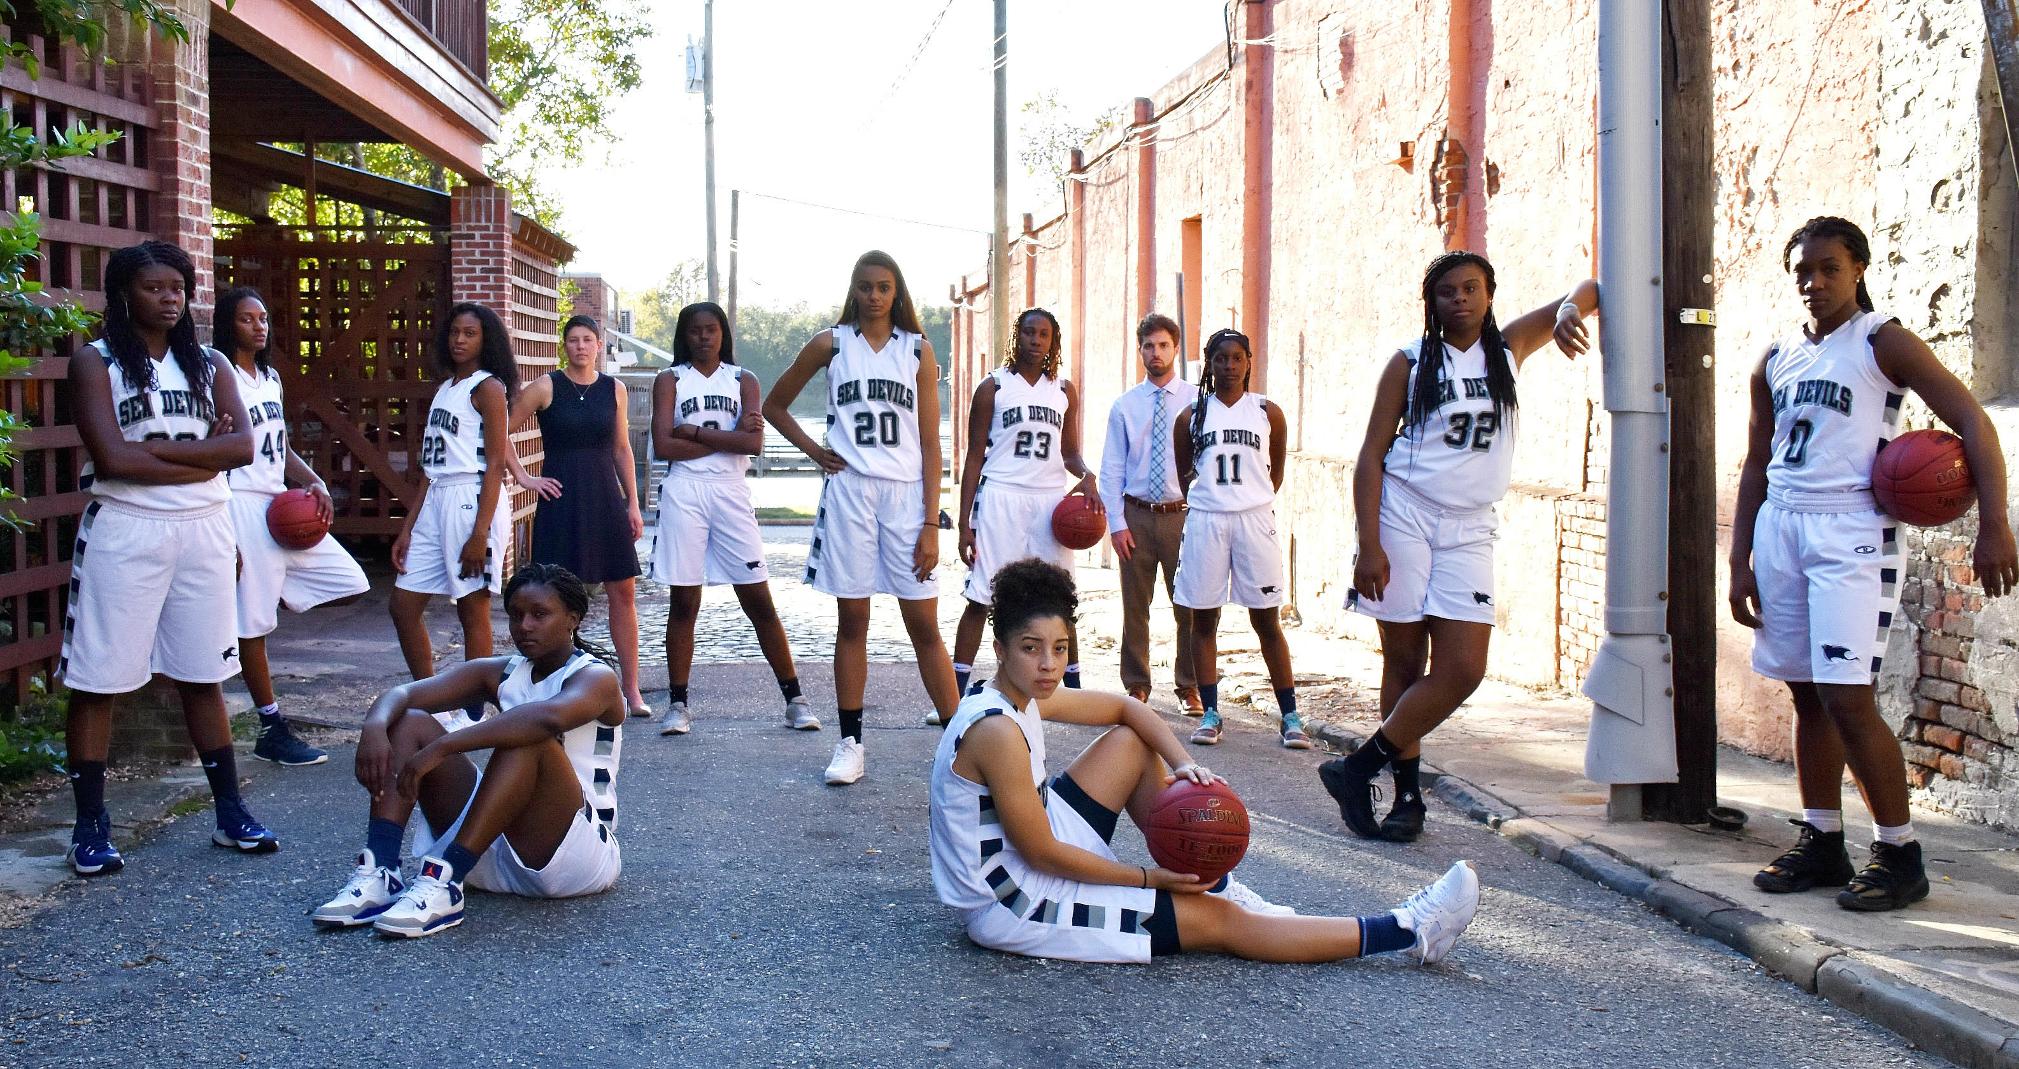 Cape Fear Women's Basketball Scrimmage